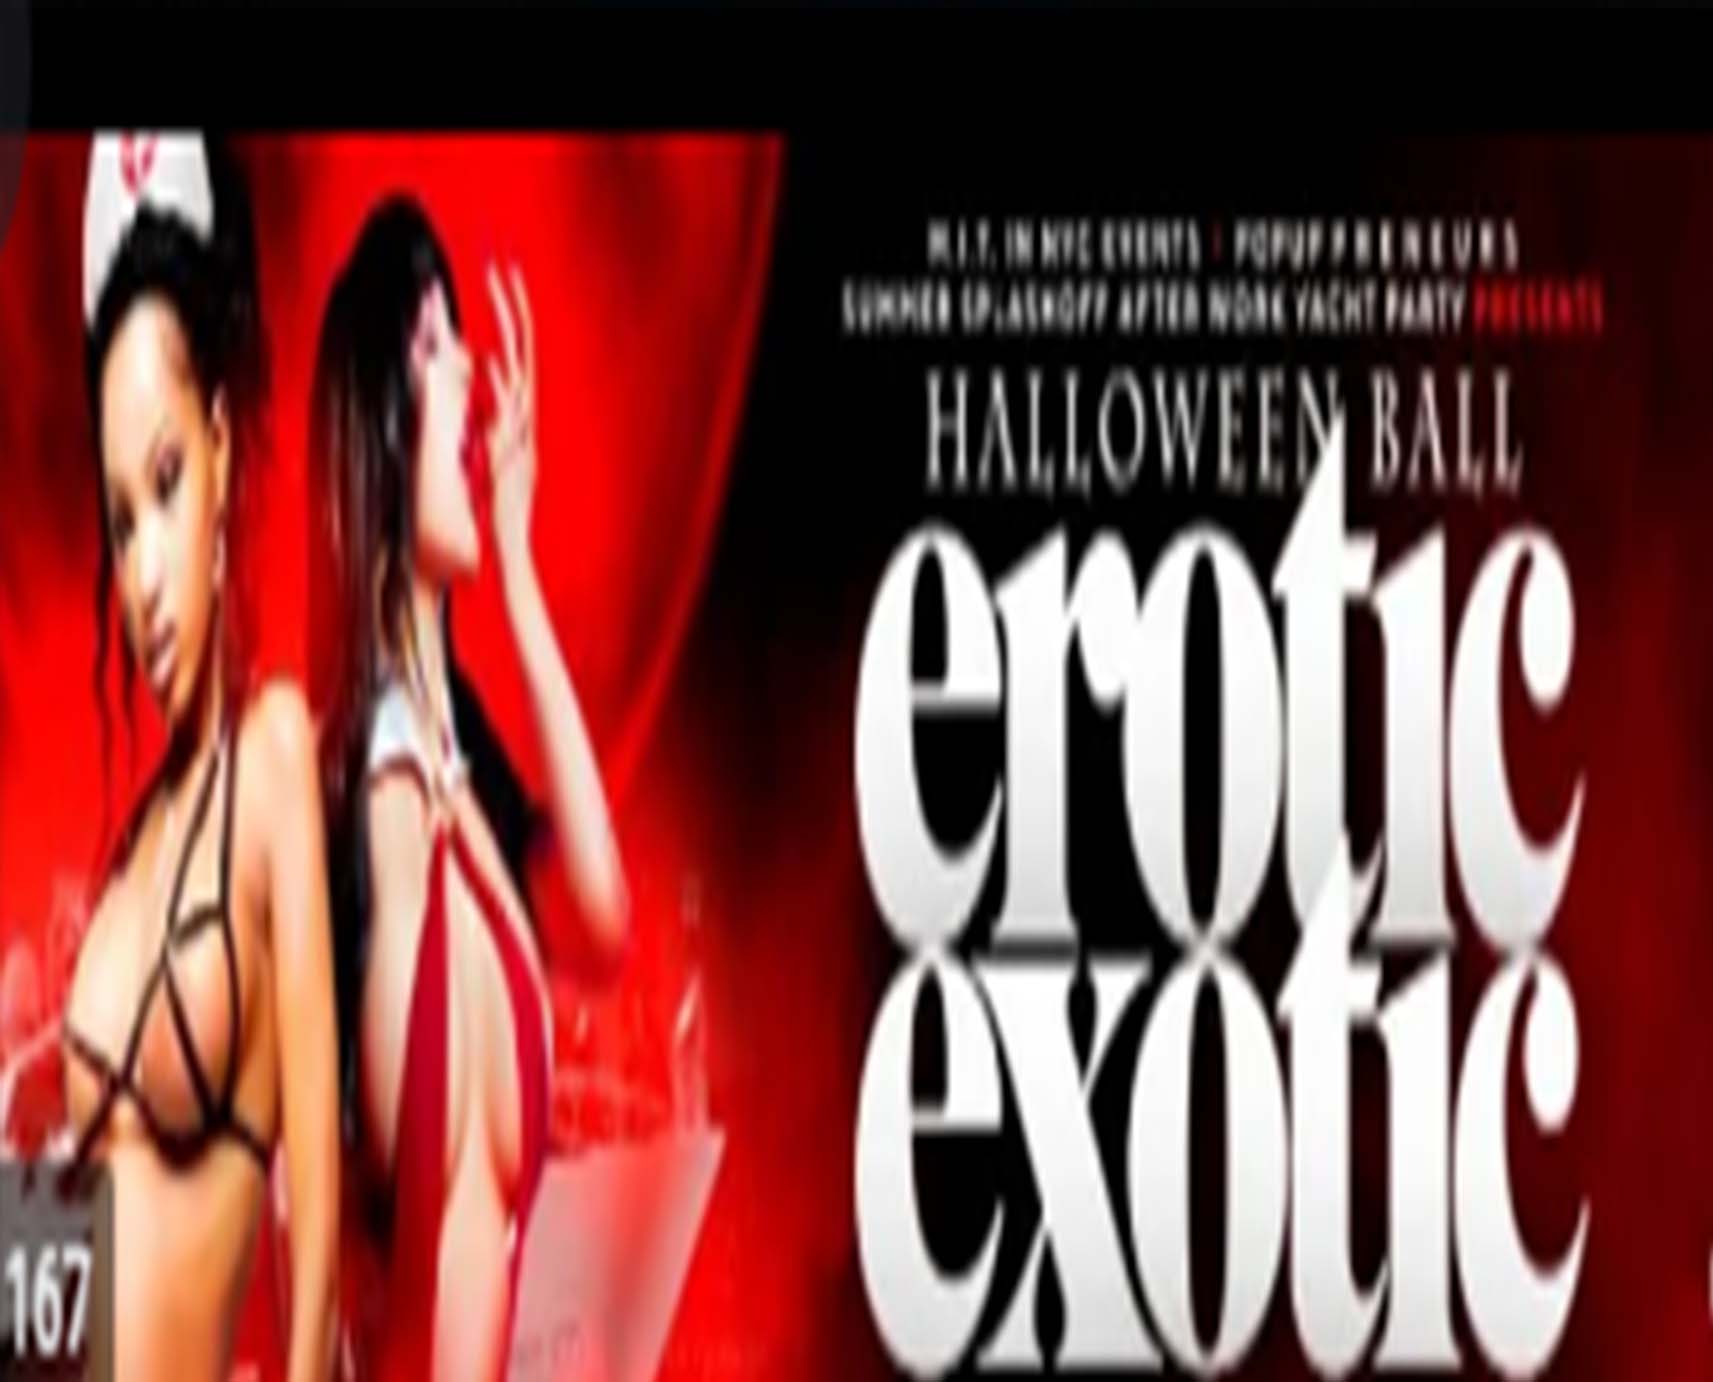  Erotic Exotic Halloween Ball / LINGERIE FASHION SHOW